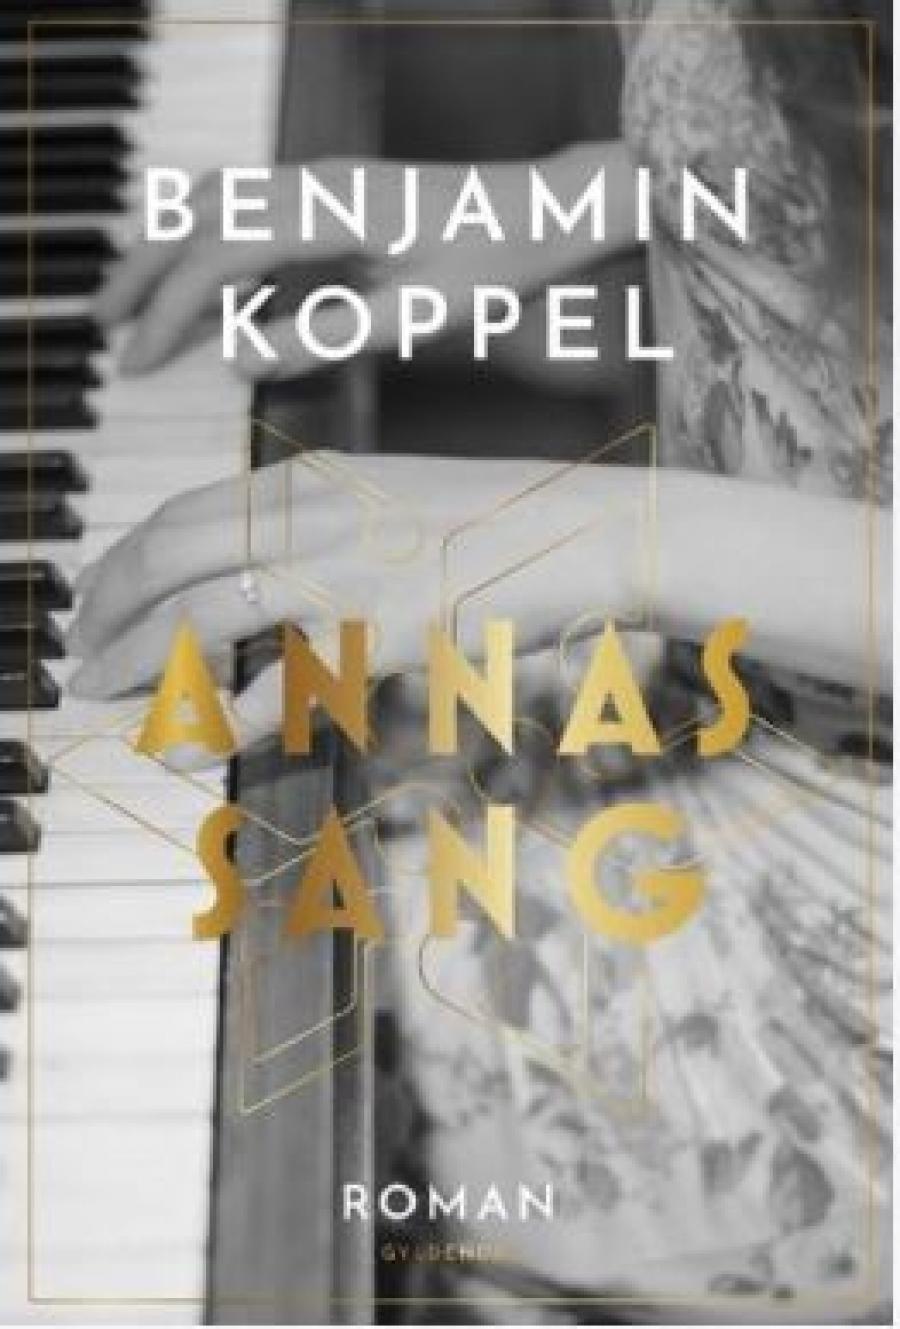 Benjamin Koppel, "Annas sang"